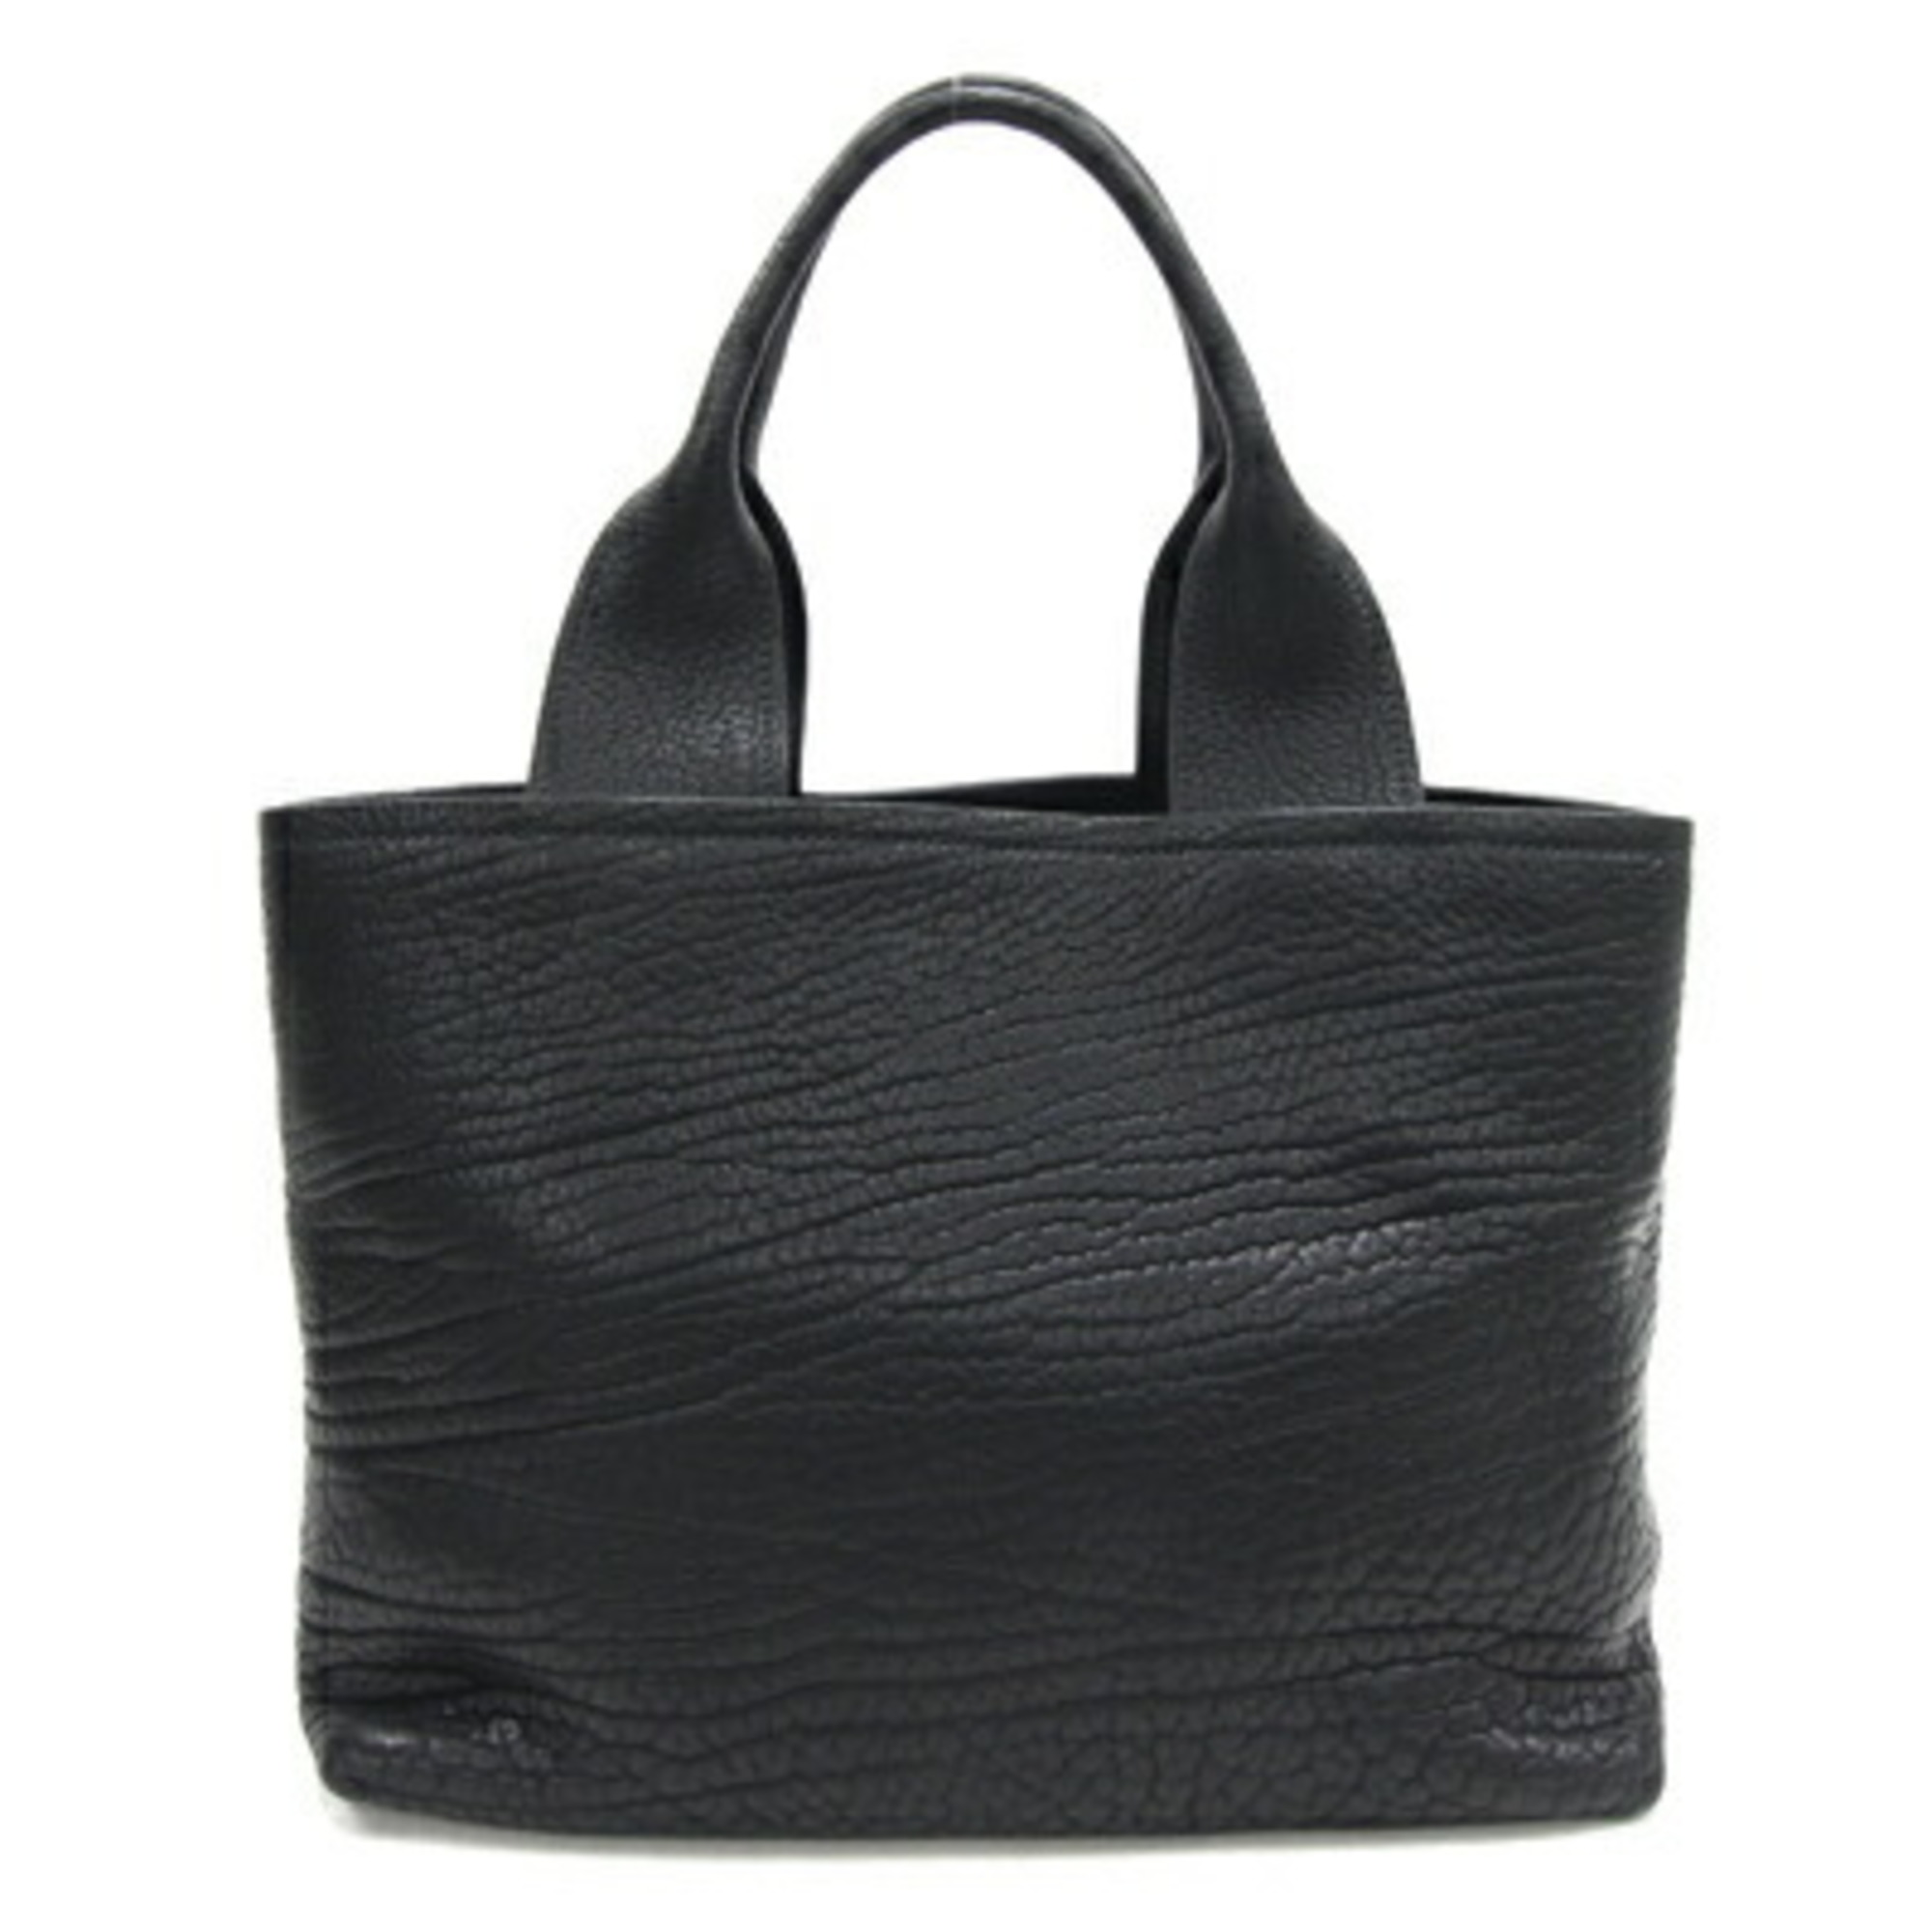 Prada tote bag 1BG440 black leather handbag for women, men, and women PRADA